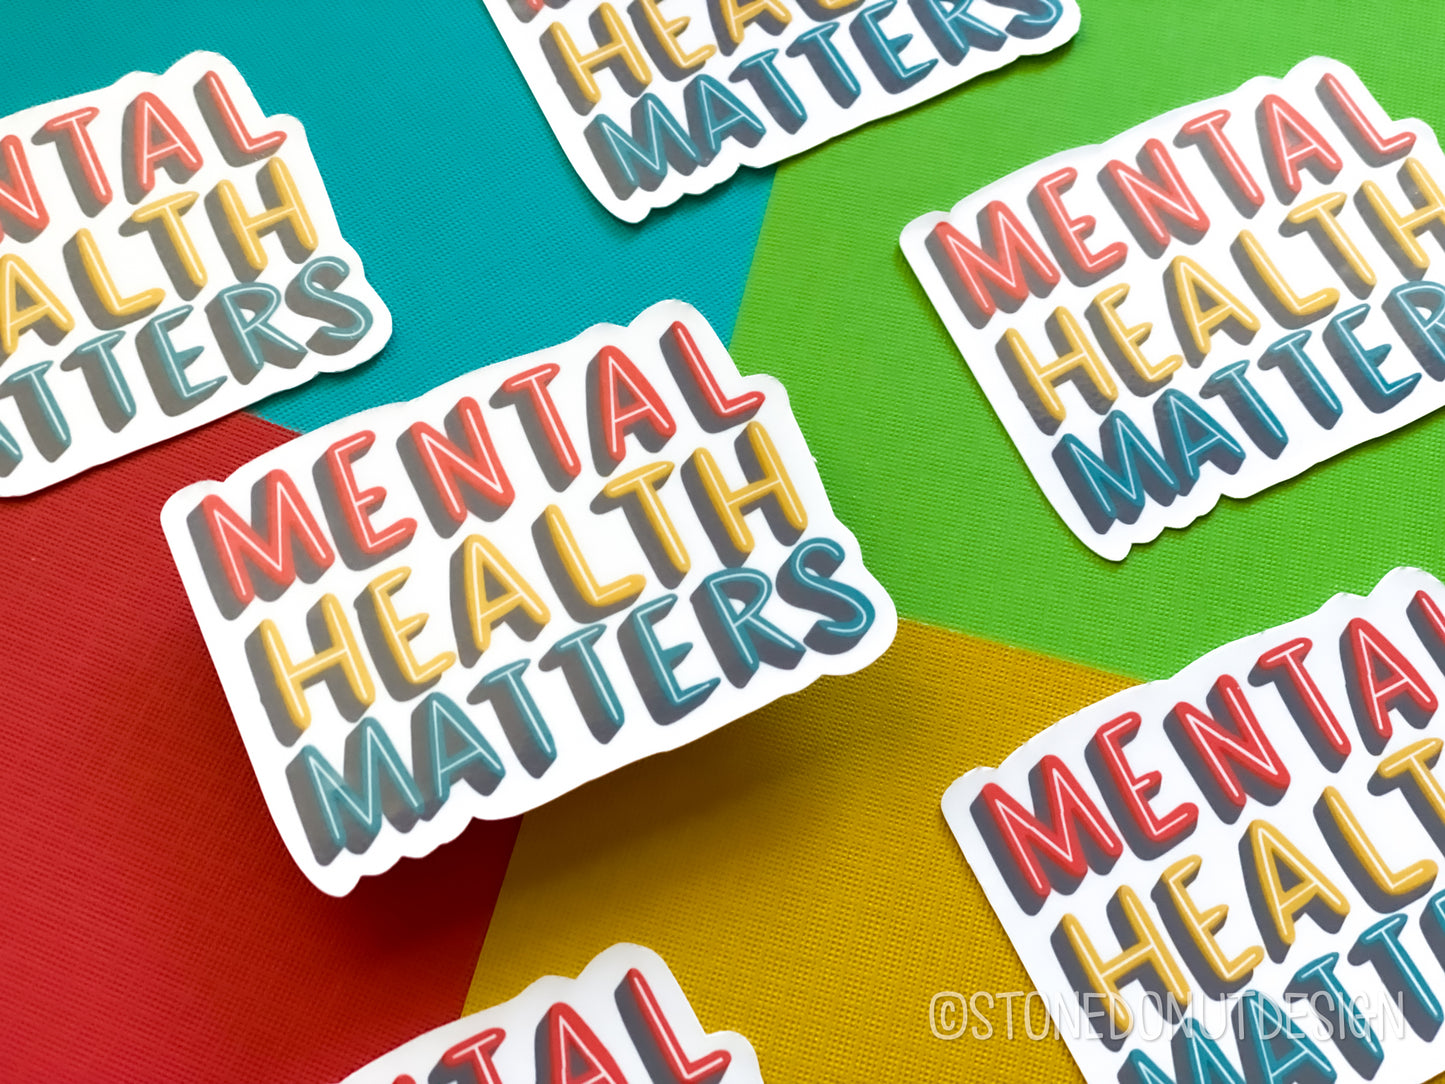 Mental Health Matters Vinyl Sticker